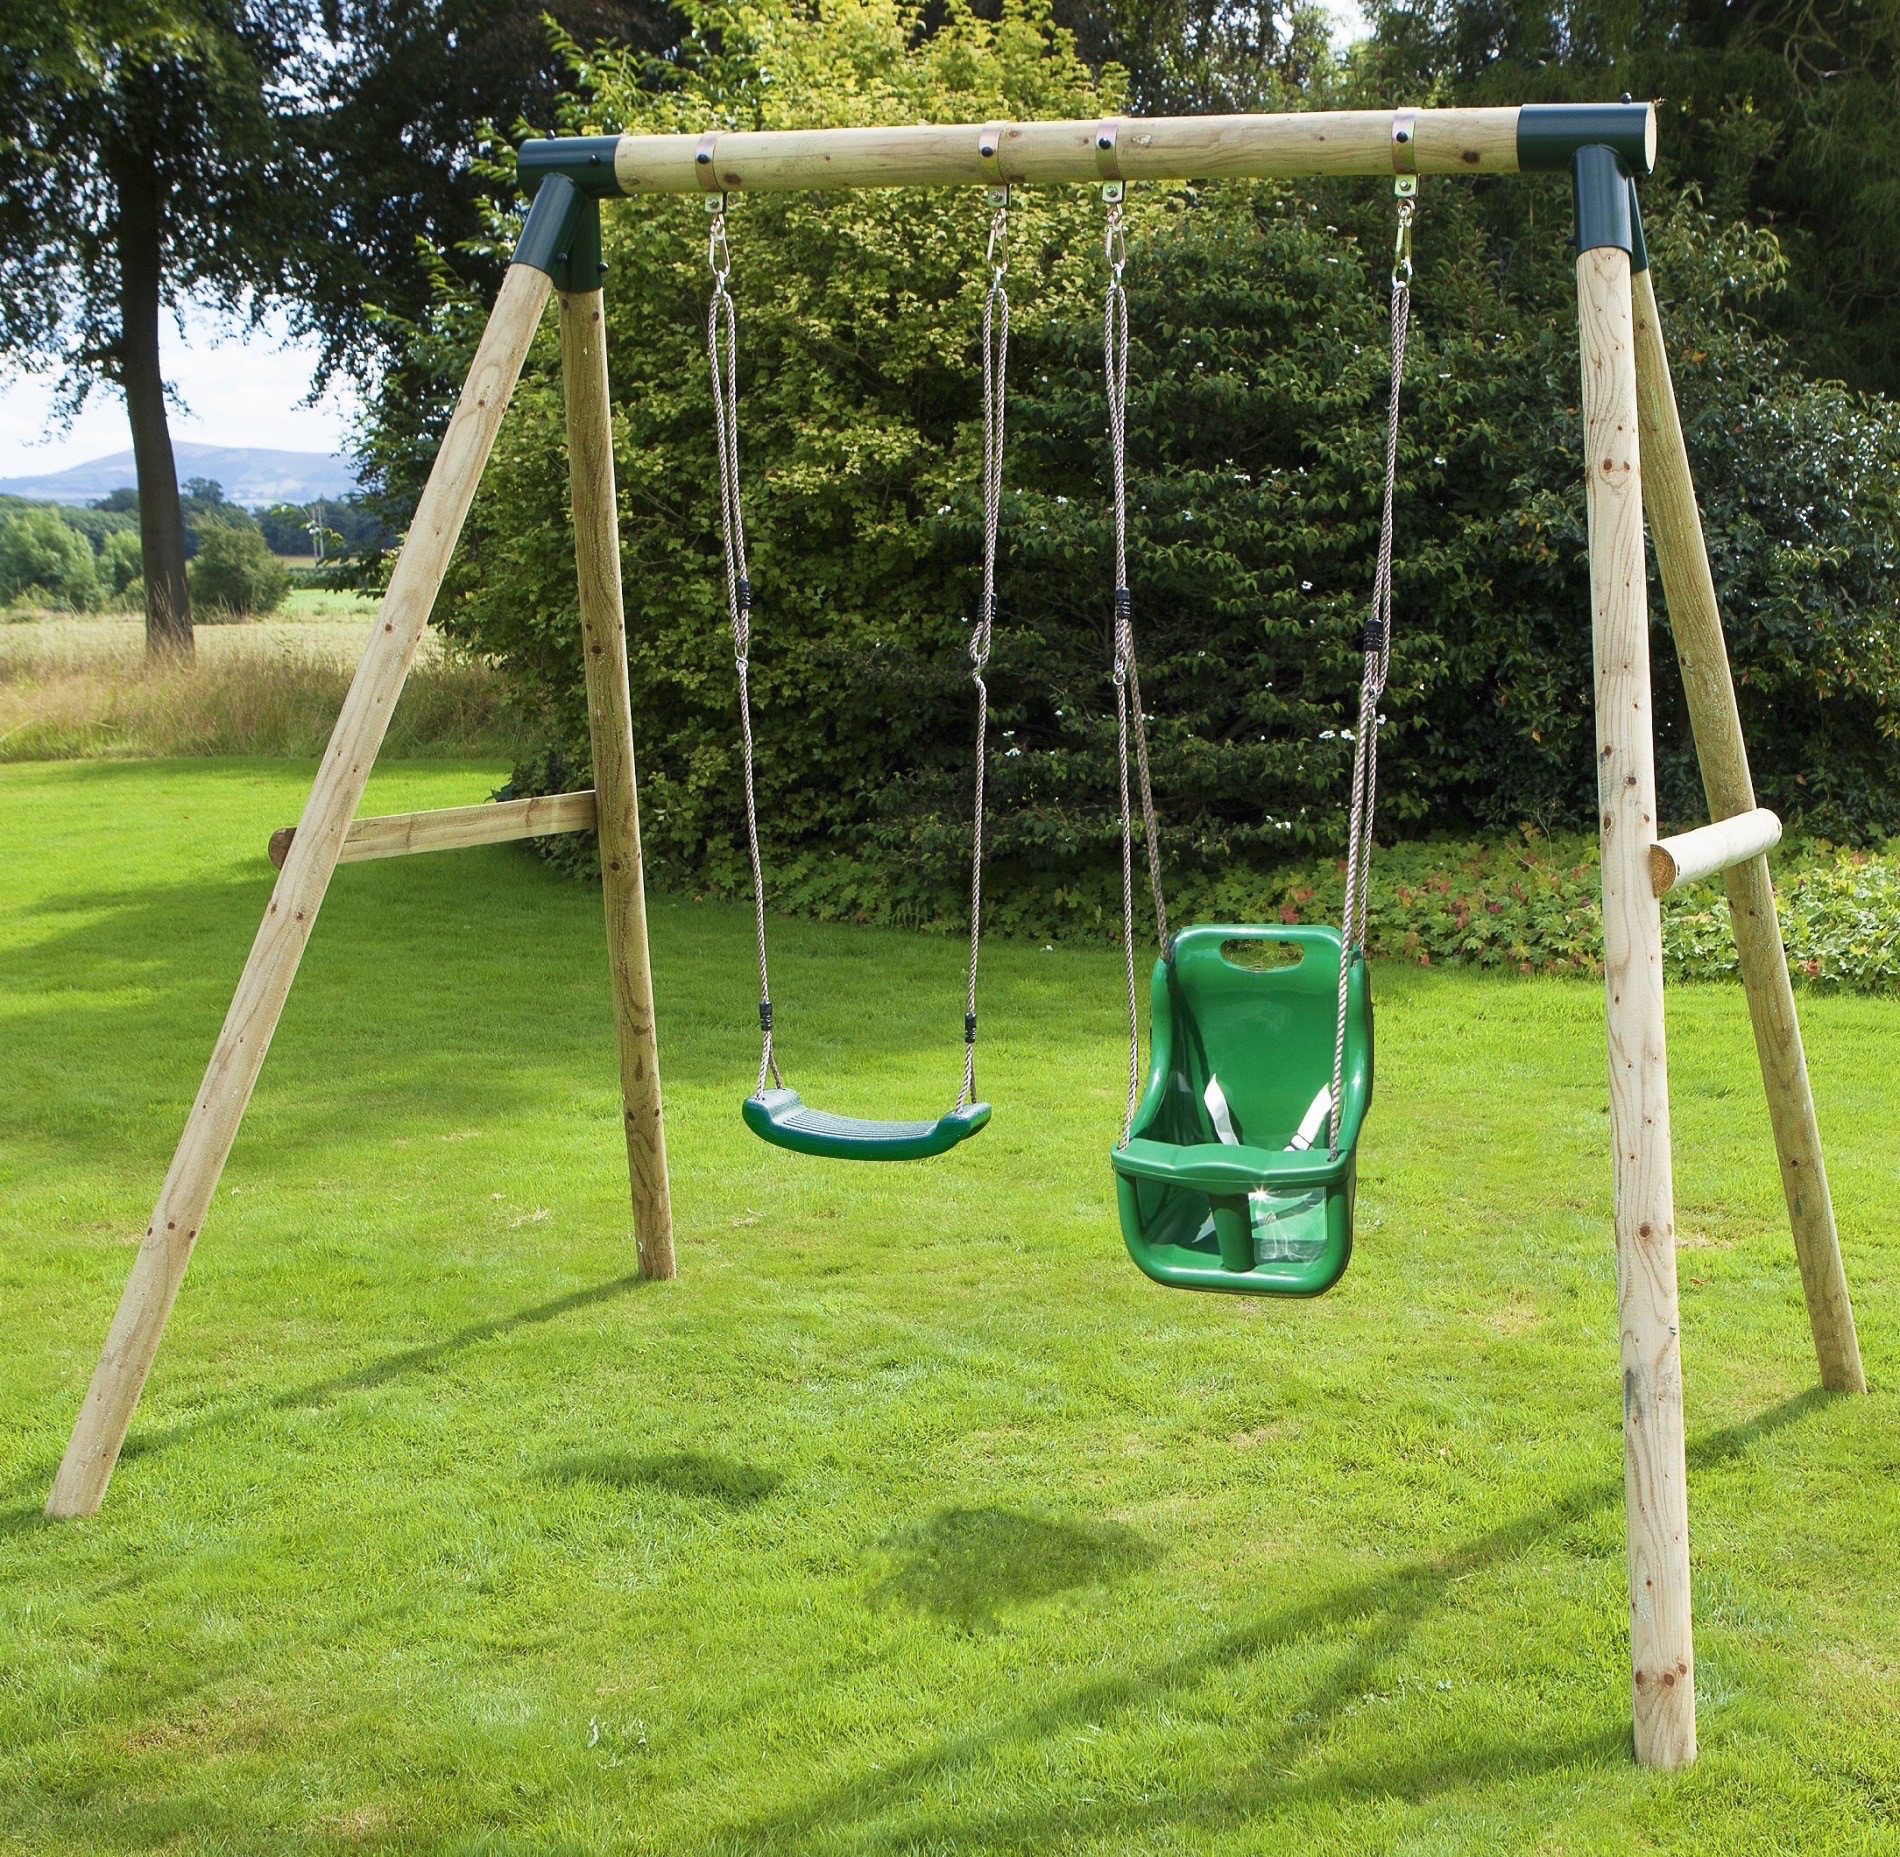 Backyard Swing Set For Kids
 Rebo Children s Wooden Garden Swing Sets Single Baby